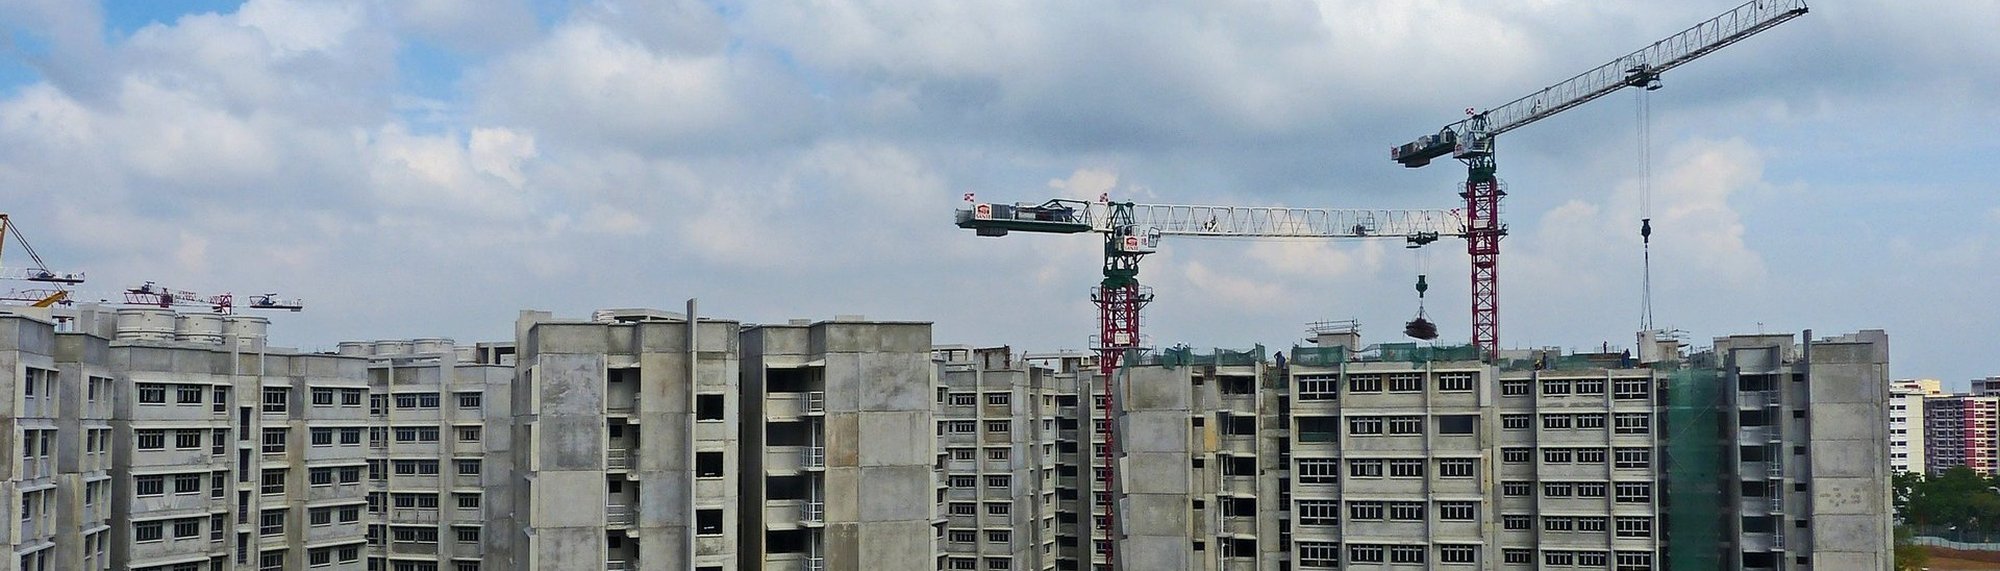 Ulanovsky Construccion